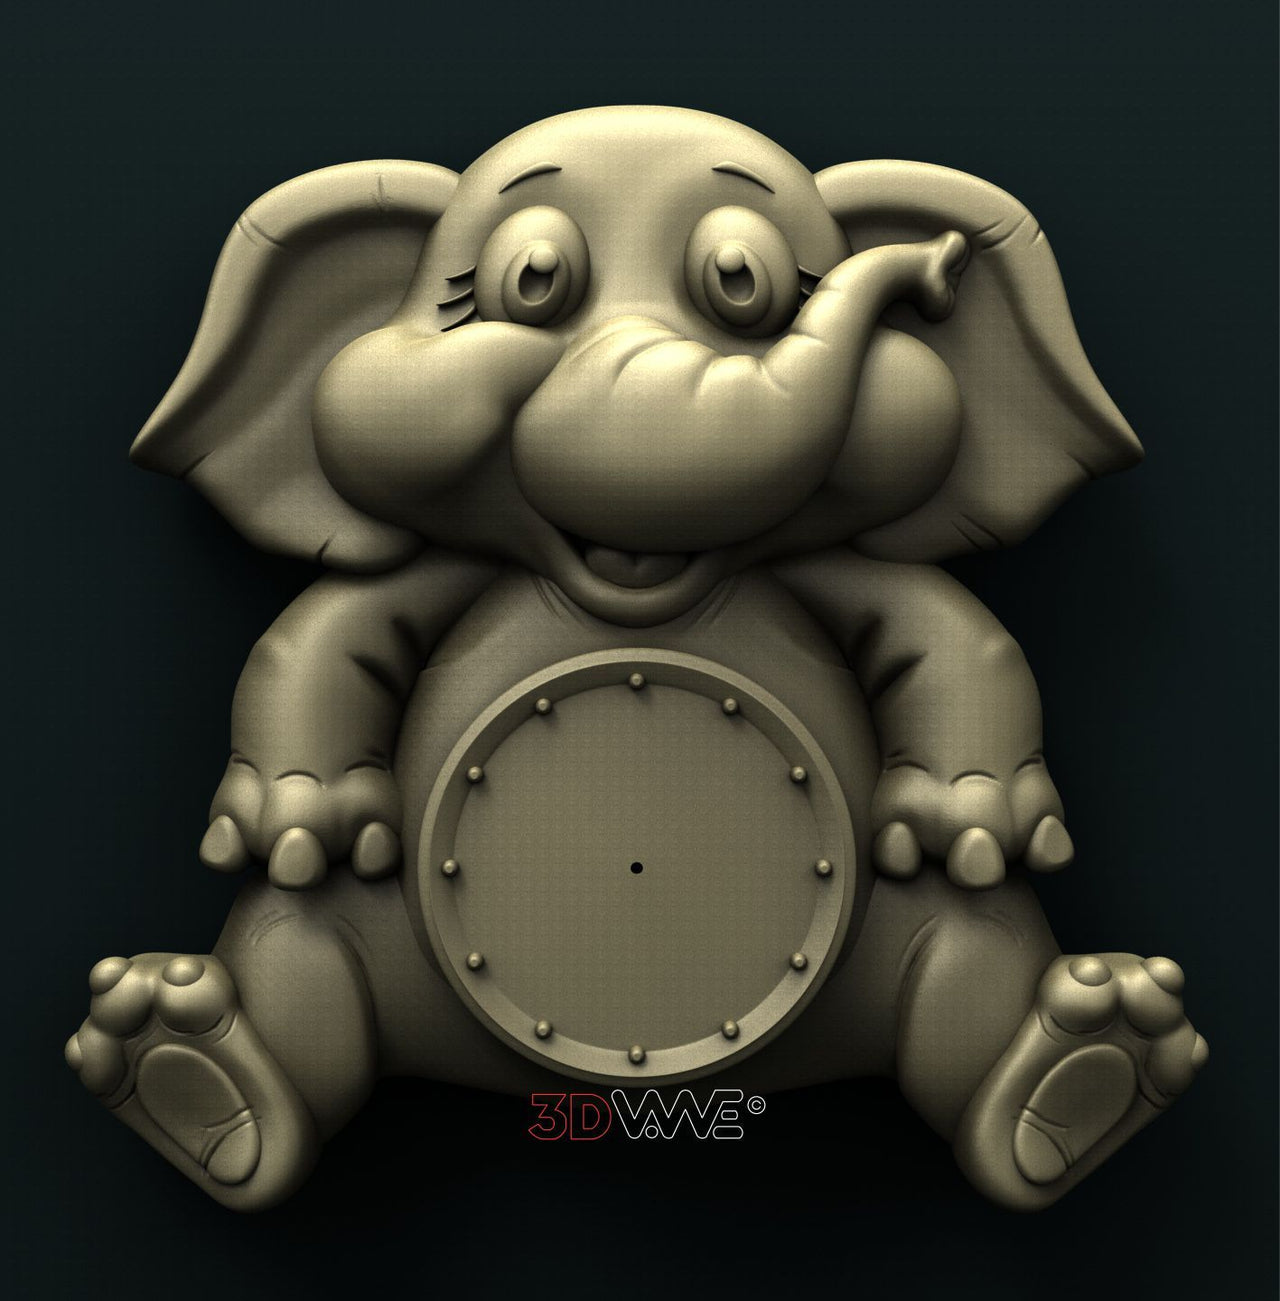 ELEPHANT CLOCK 3D STL 3DWave